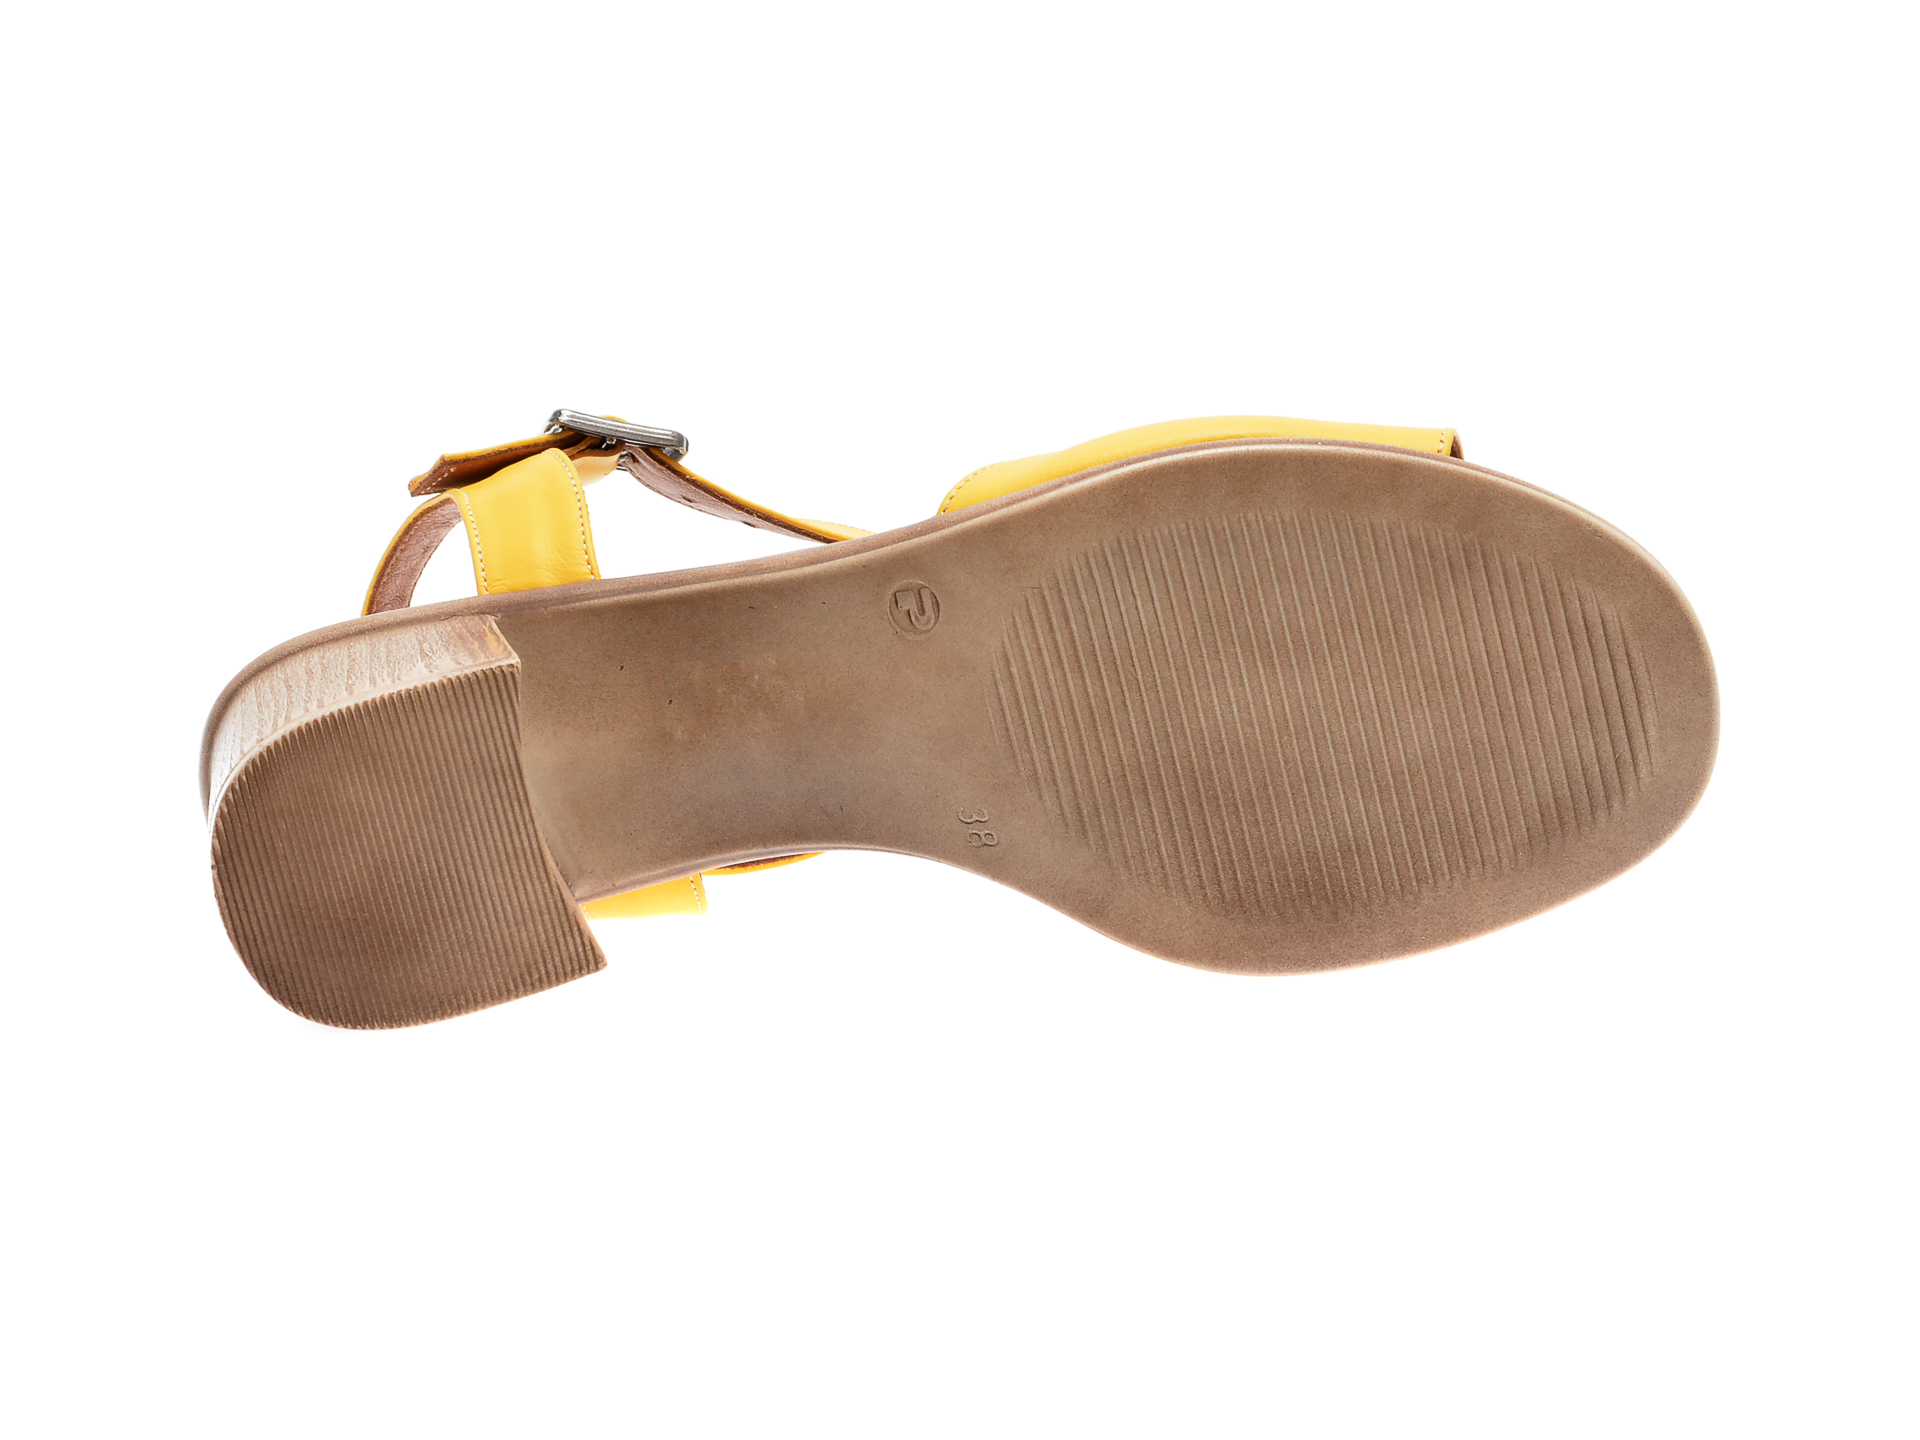 Sandale PASS COLLECTION galbene, 6005, din piele naturala